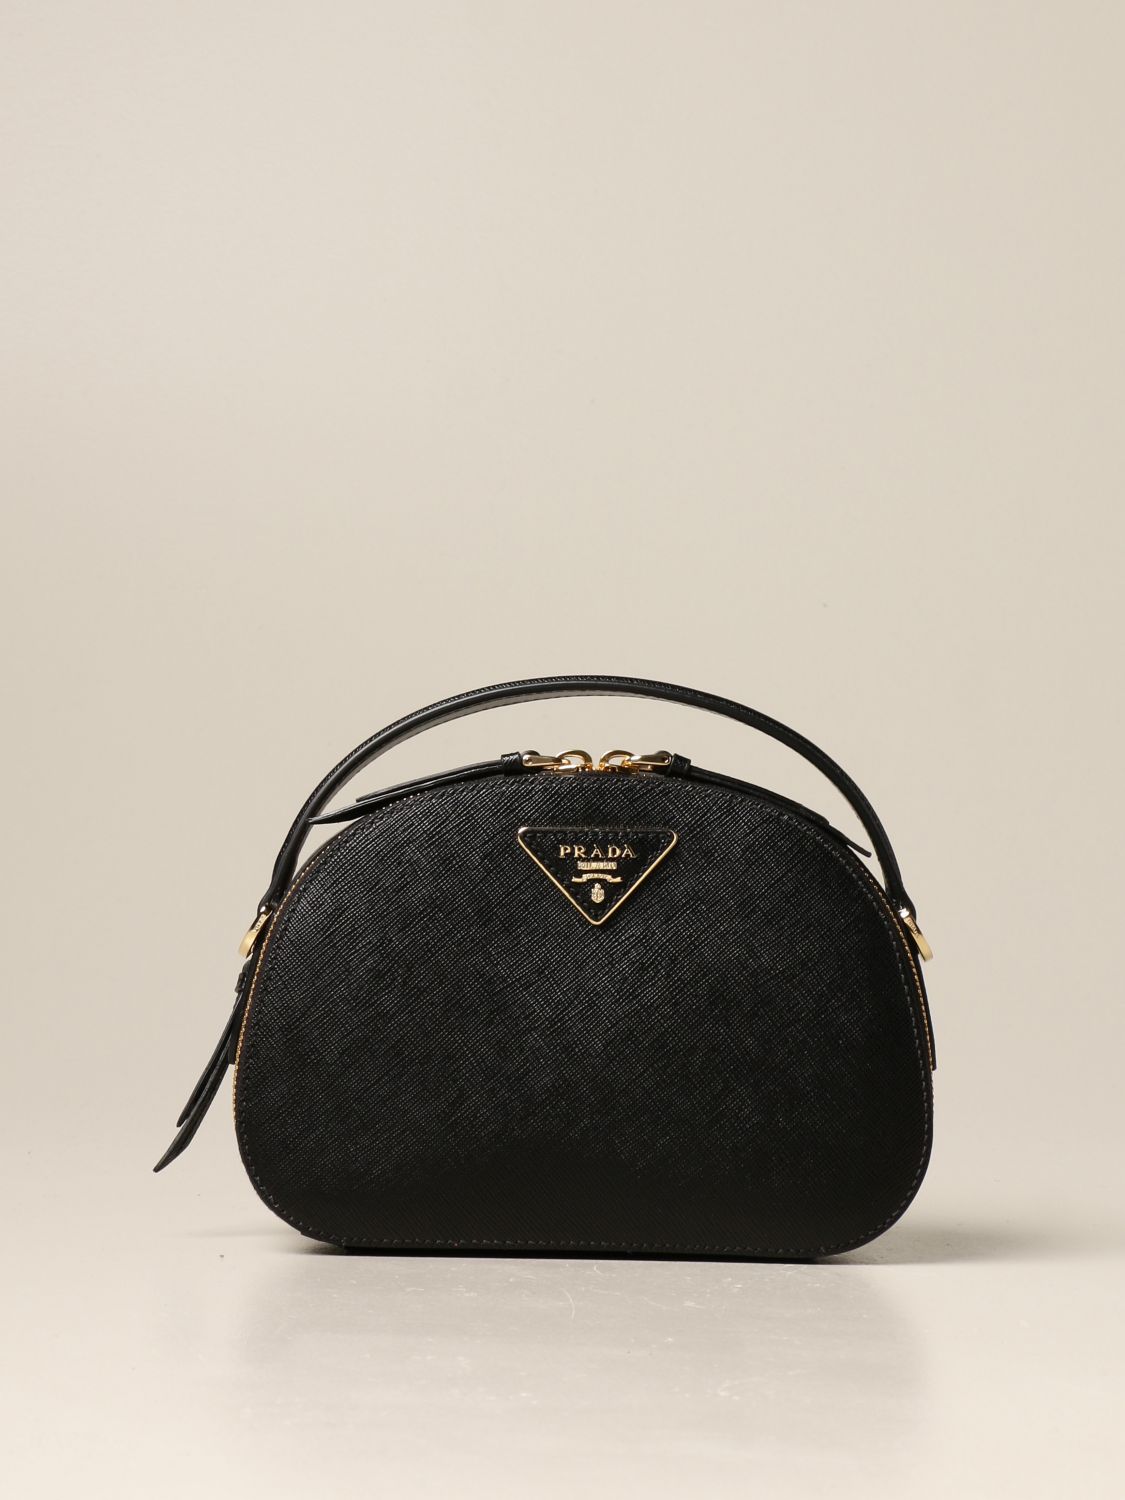 PRADA: Odette bag in saffiano leather - Black | Prada mini bag 1BH123 NZV  online on 